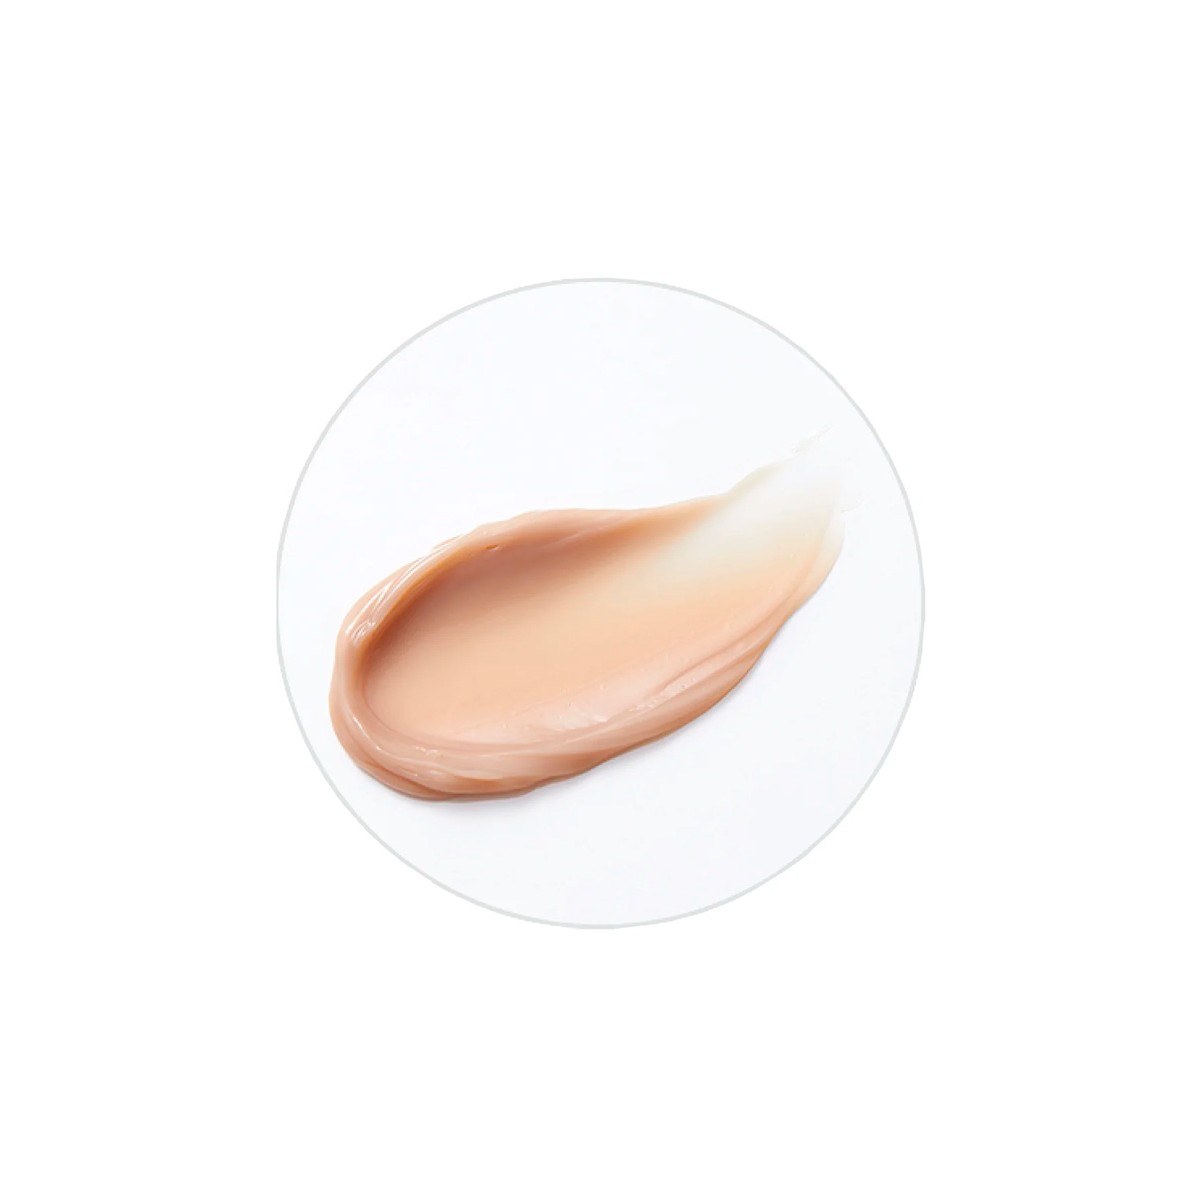 Emulsión al mejor precio: Missha Chogongjin Sosaeng Cream- Crema Anti Edad Premium de Missha en Skin Thinks - Piel Seca